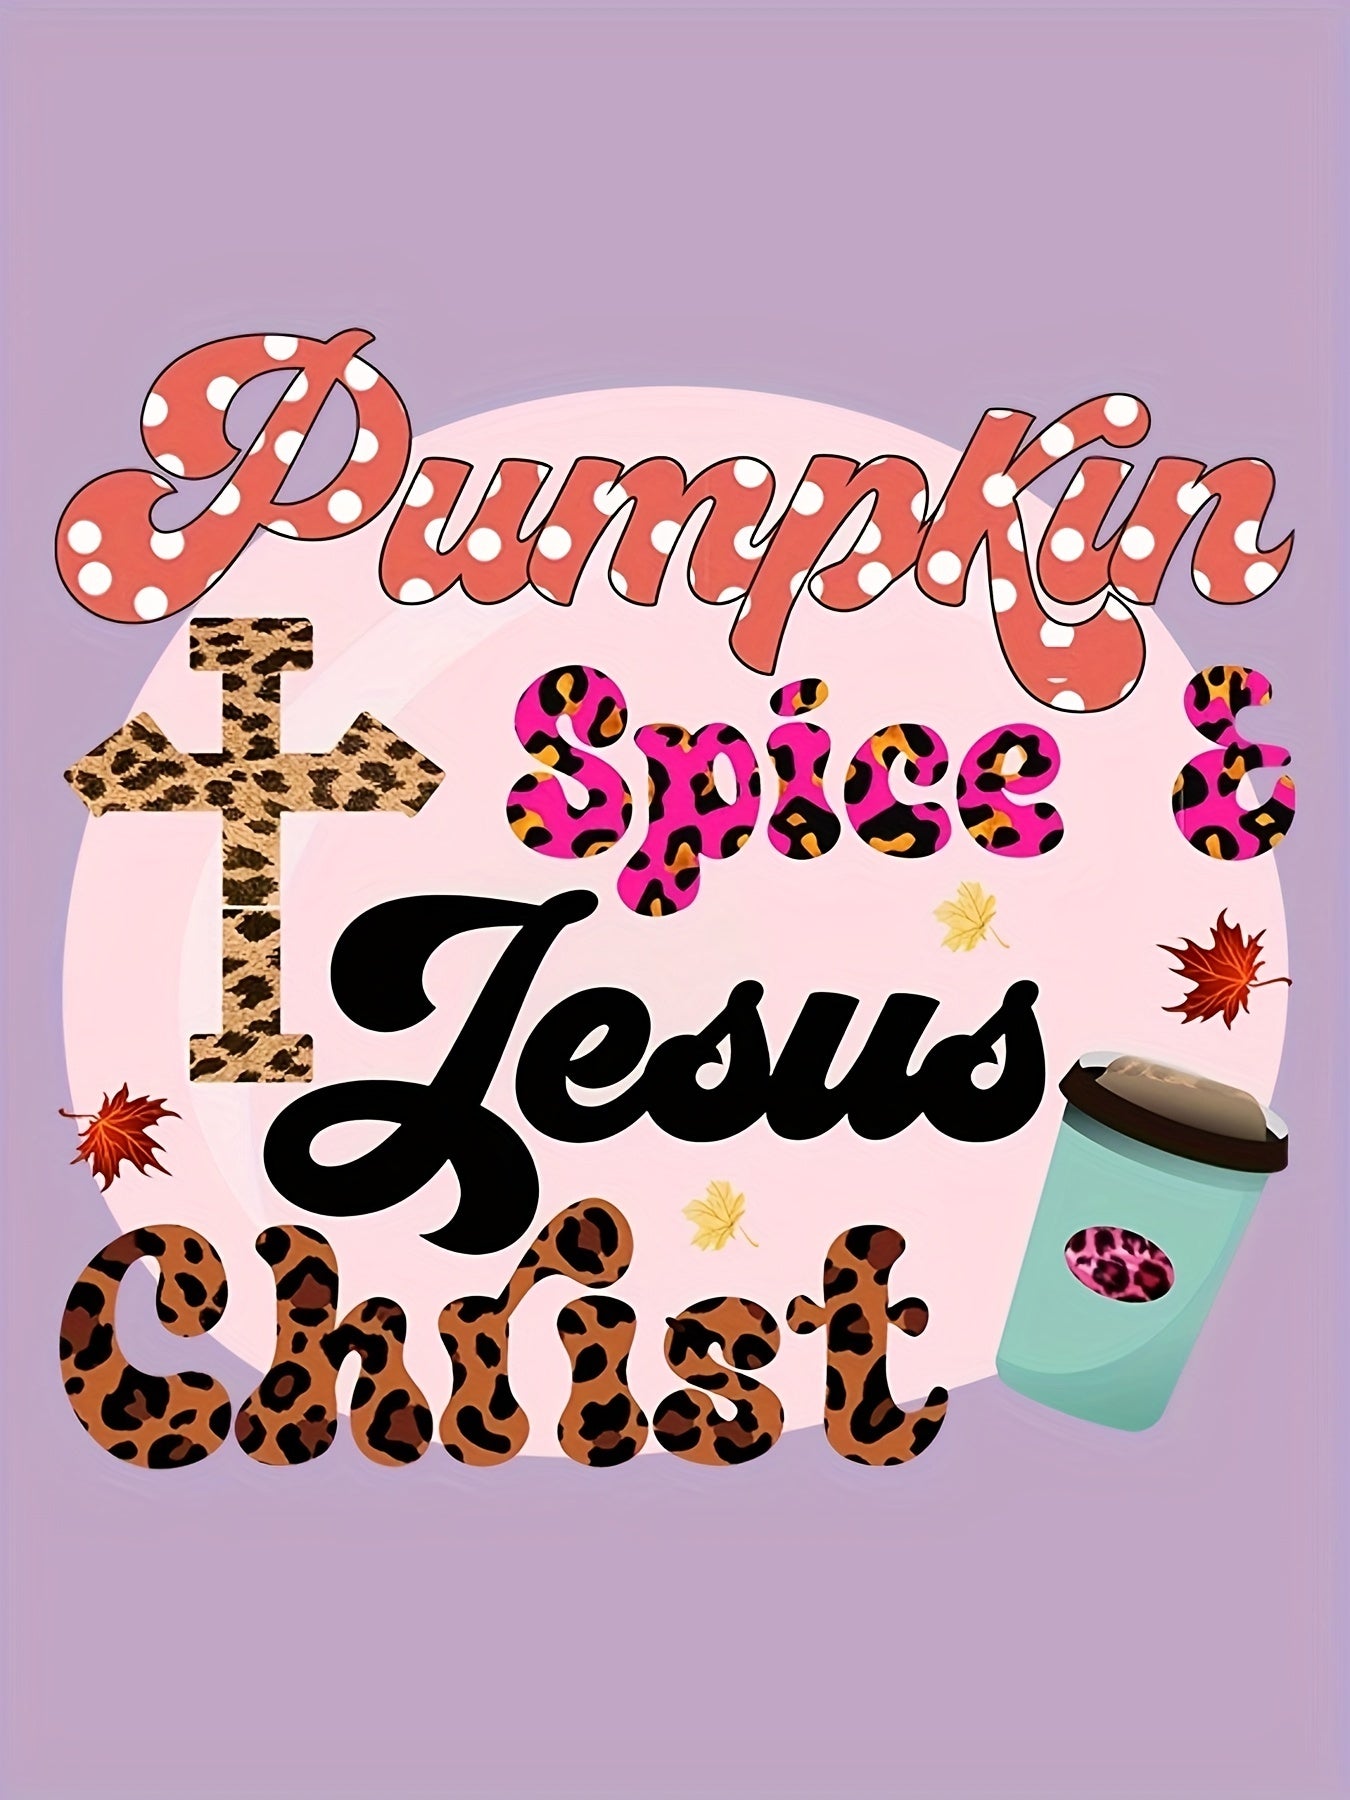 Pumpkin Spice & Jesus Christ (thanksgiving themed) Youth Christian Pullover Sweatshirt claimedbygoddesigns